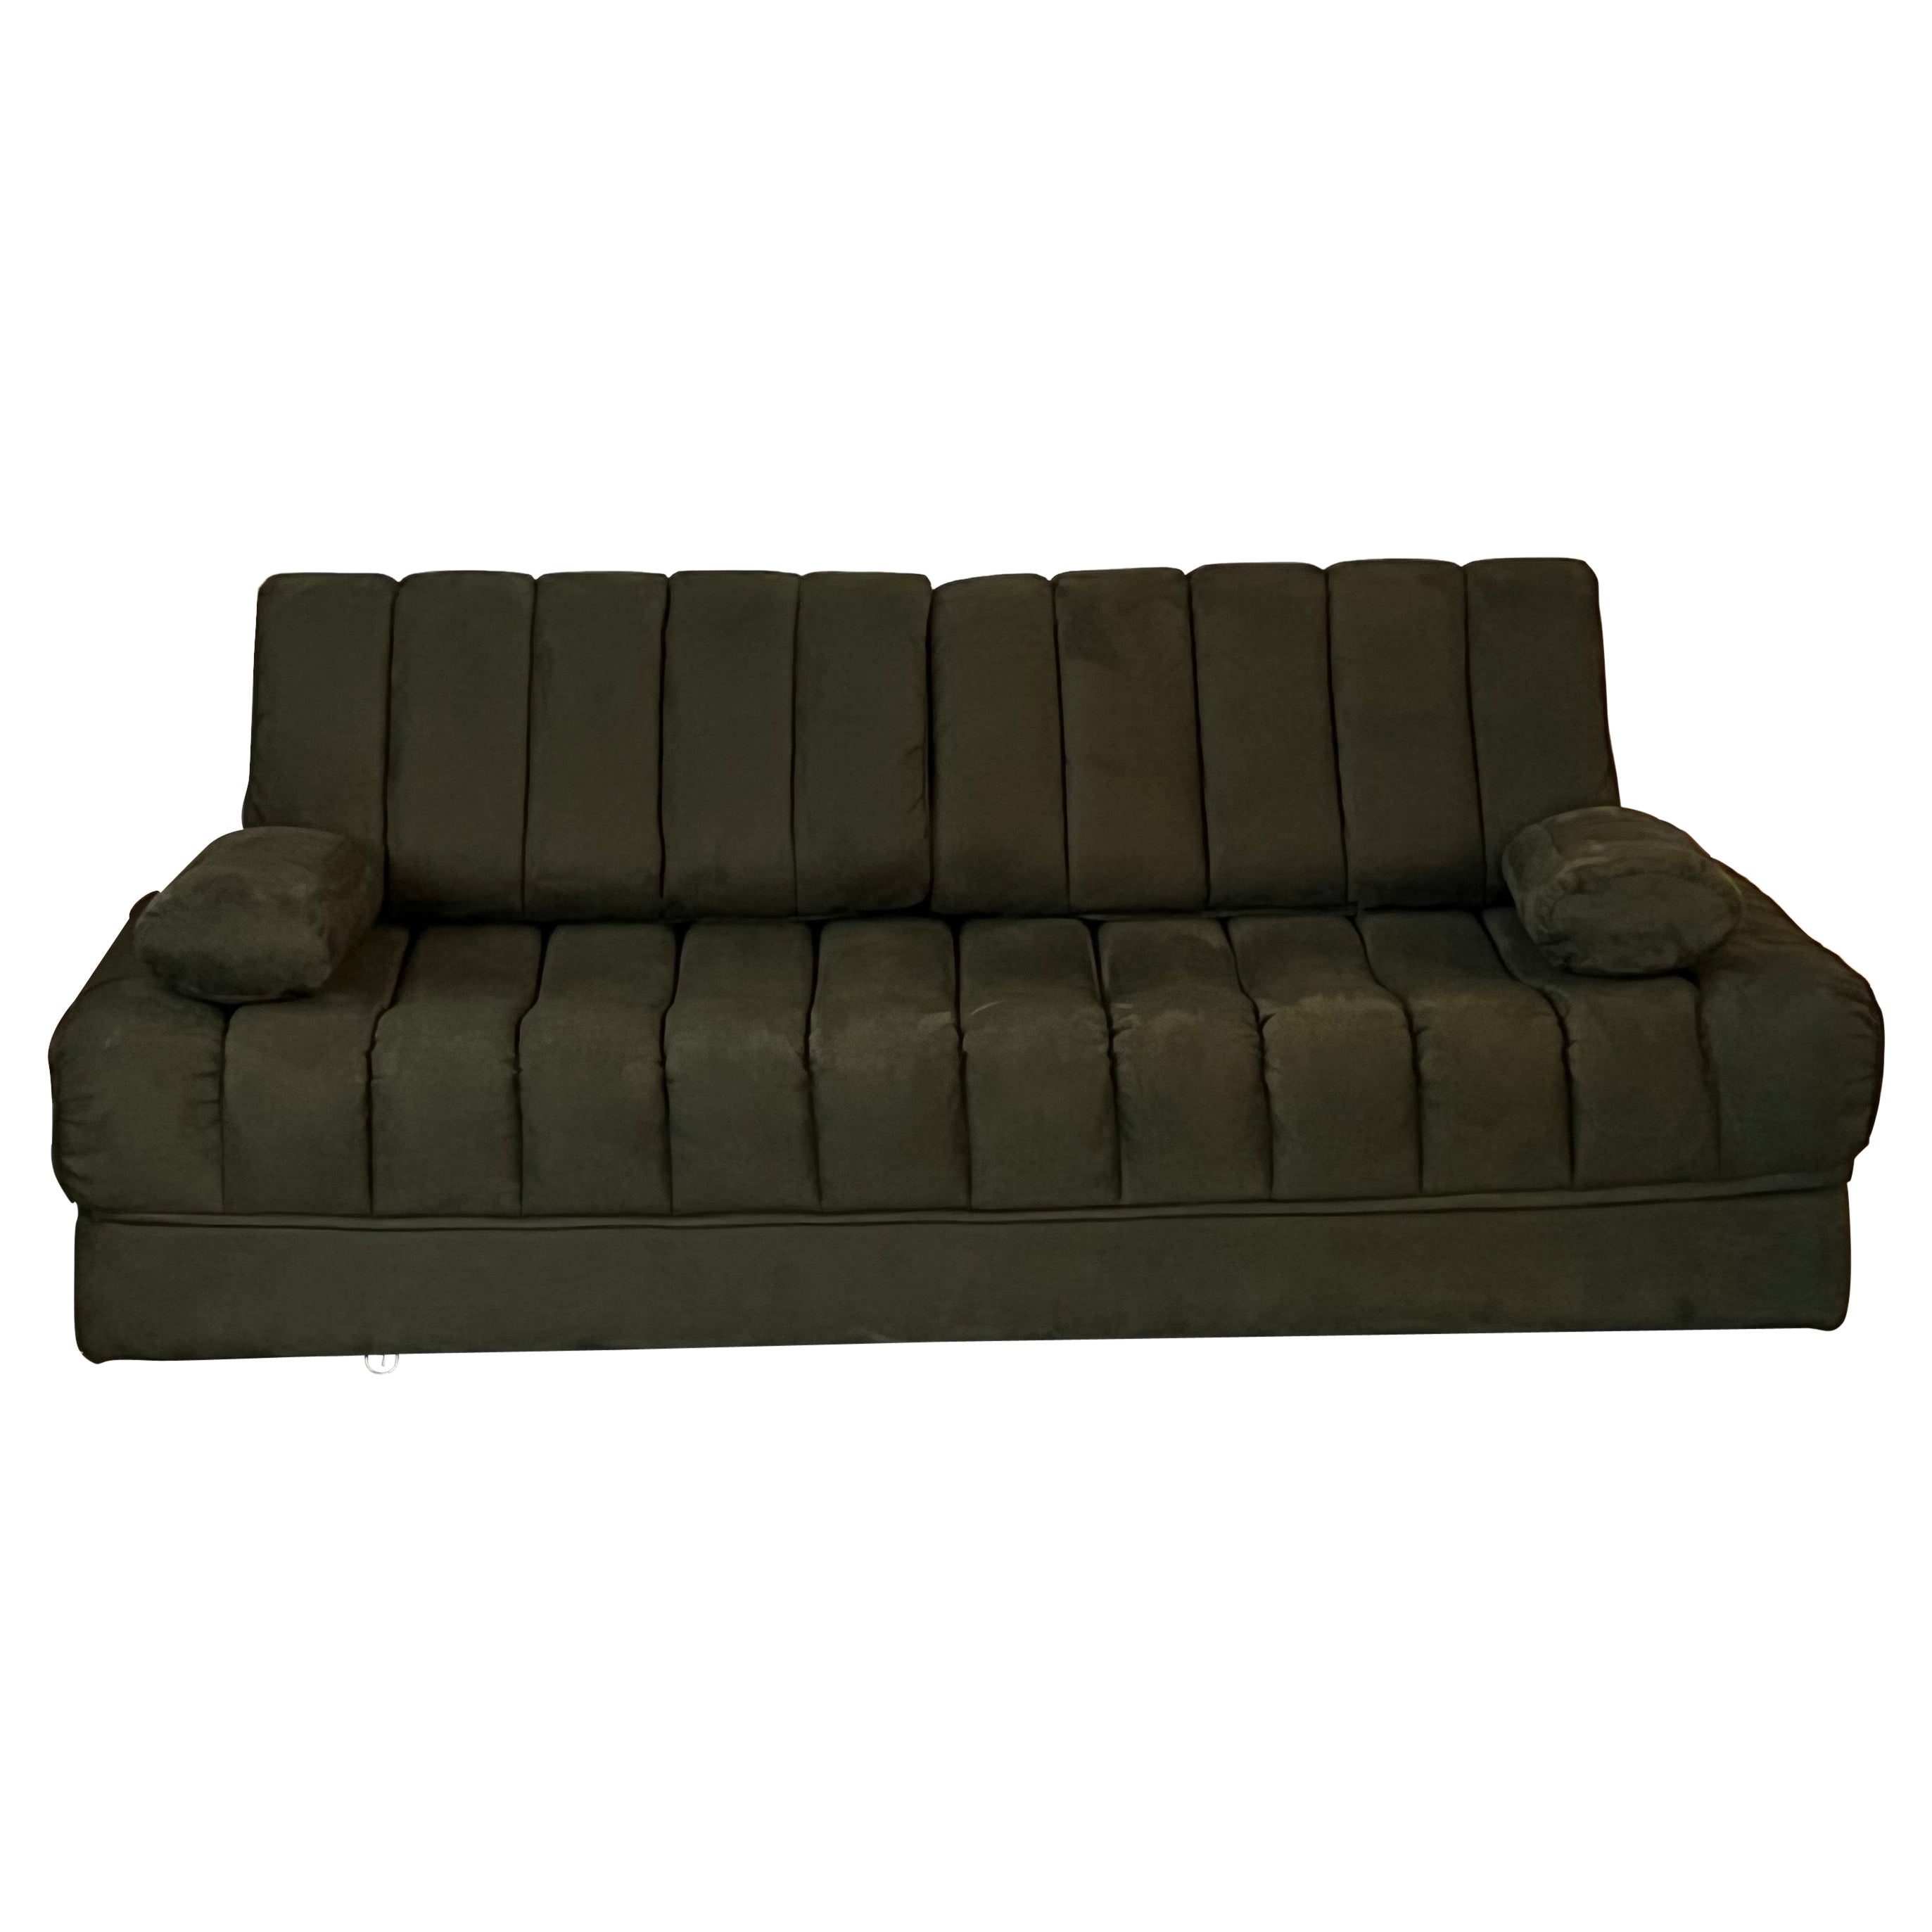 DS 85 sofa bed by De Sede 60s For Sale